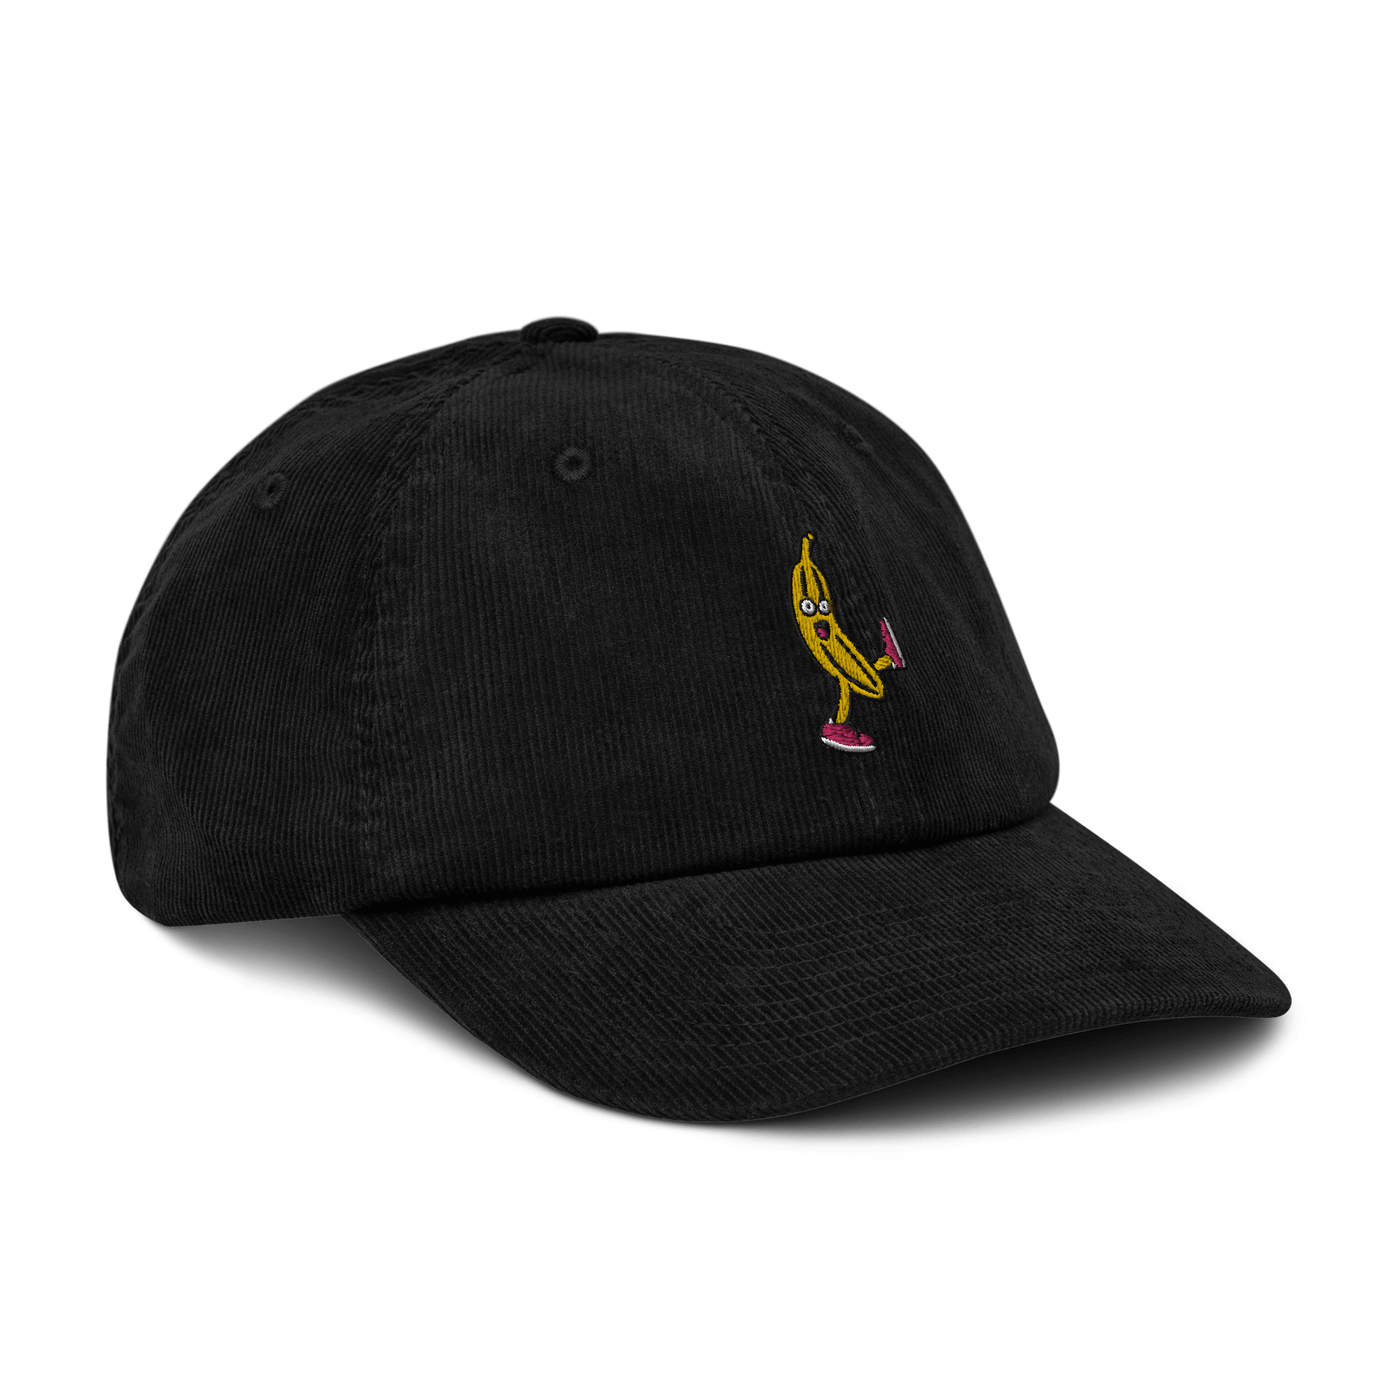 Drunk Banana Corduroy hat - Black - - Just Another Cap Store